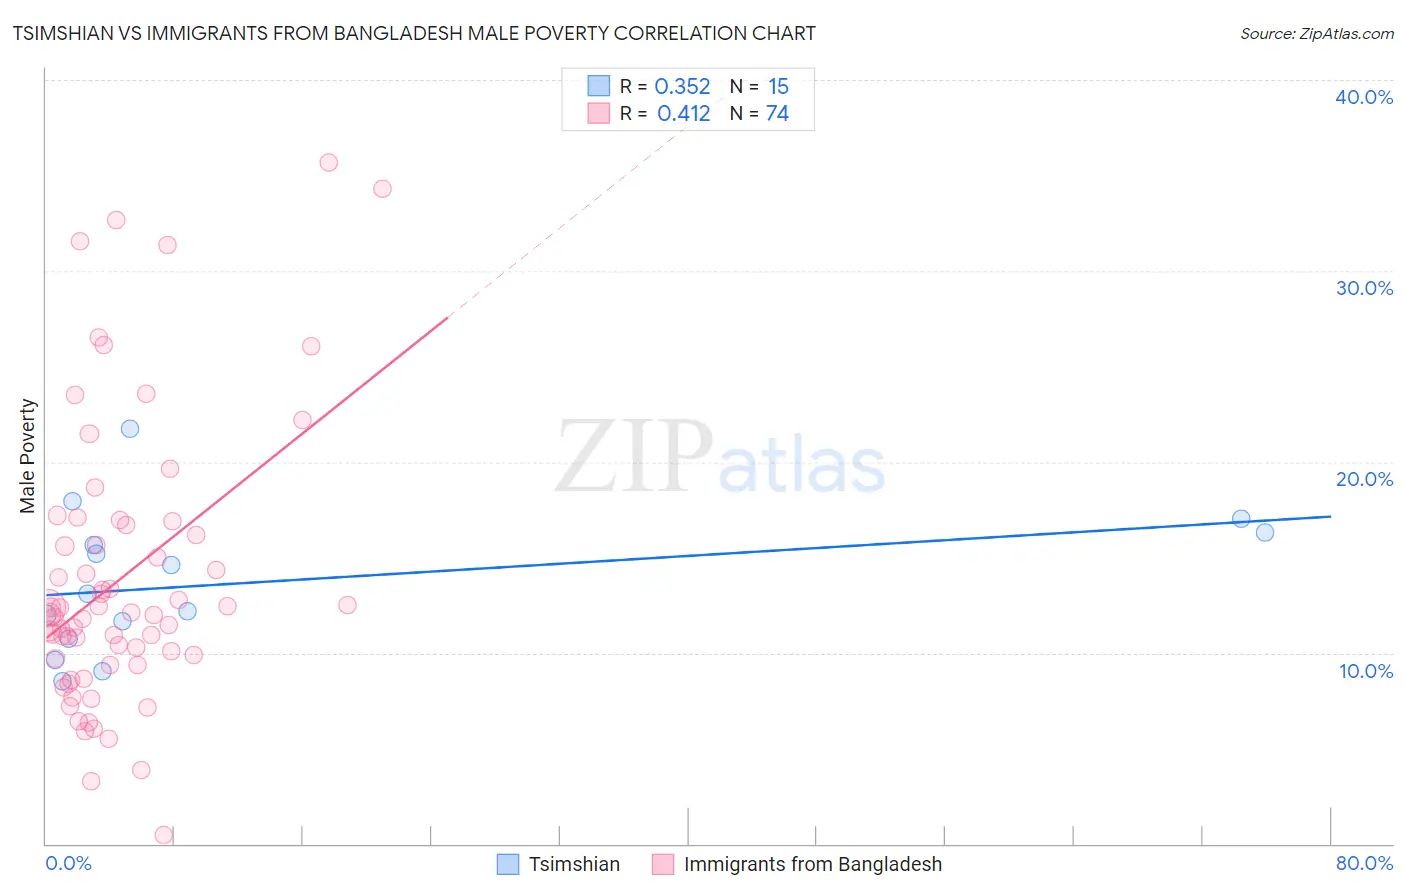 Tsimshian vs Immigrants from Bangladesh Male Poverty